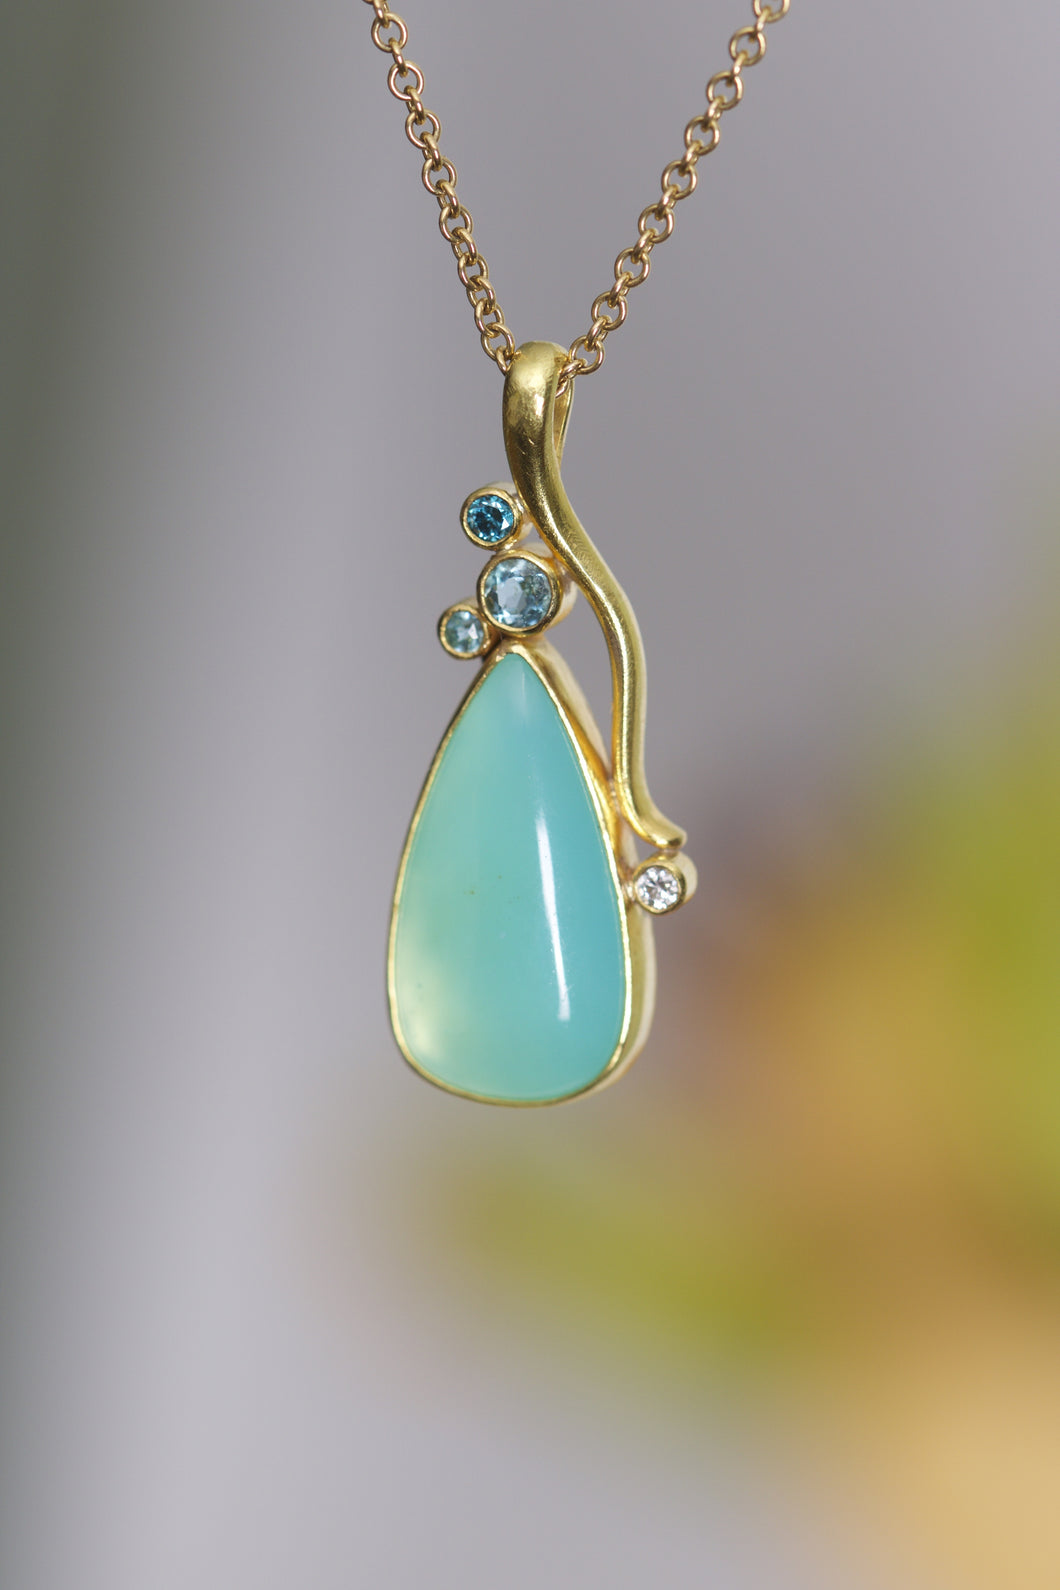 Peruvian Opal Pendant 06121 - Ormachea Jewelry